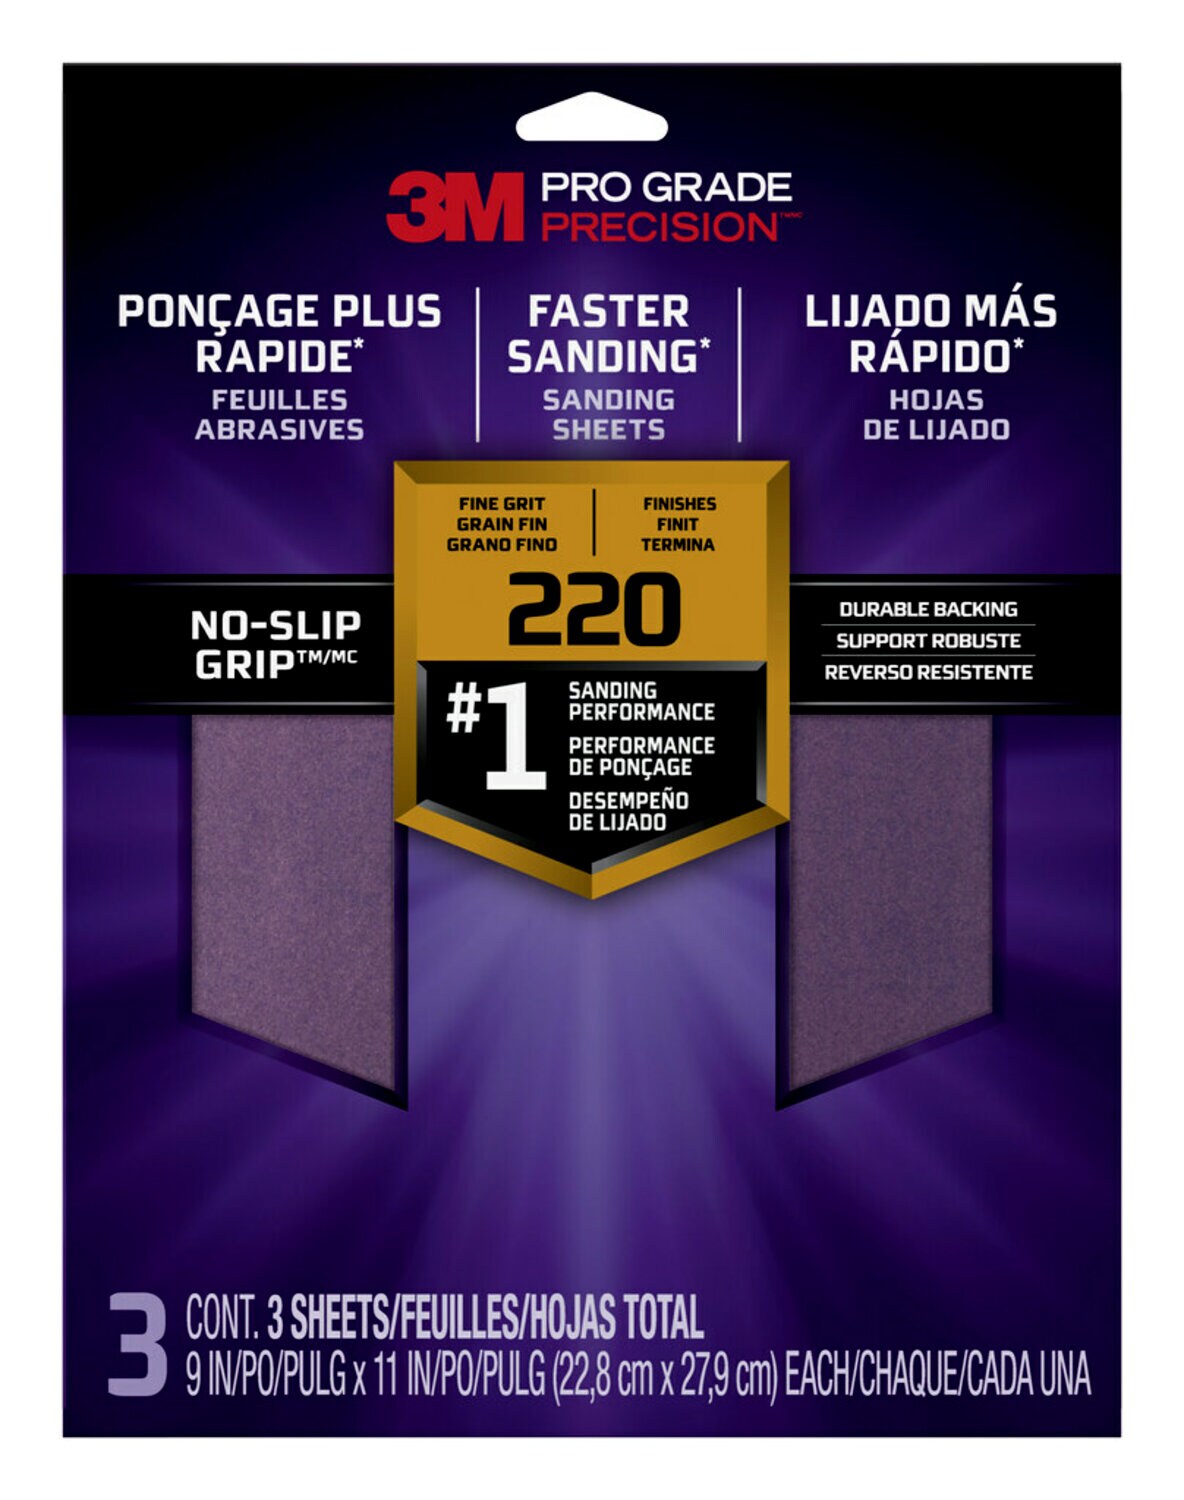 7010416998 - 3M Pro Grade Precision Faster Sanding Sanding Sheets 220 grit Fine,
26220TRI-3, 9 in x 11 in, 3/pk